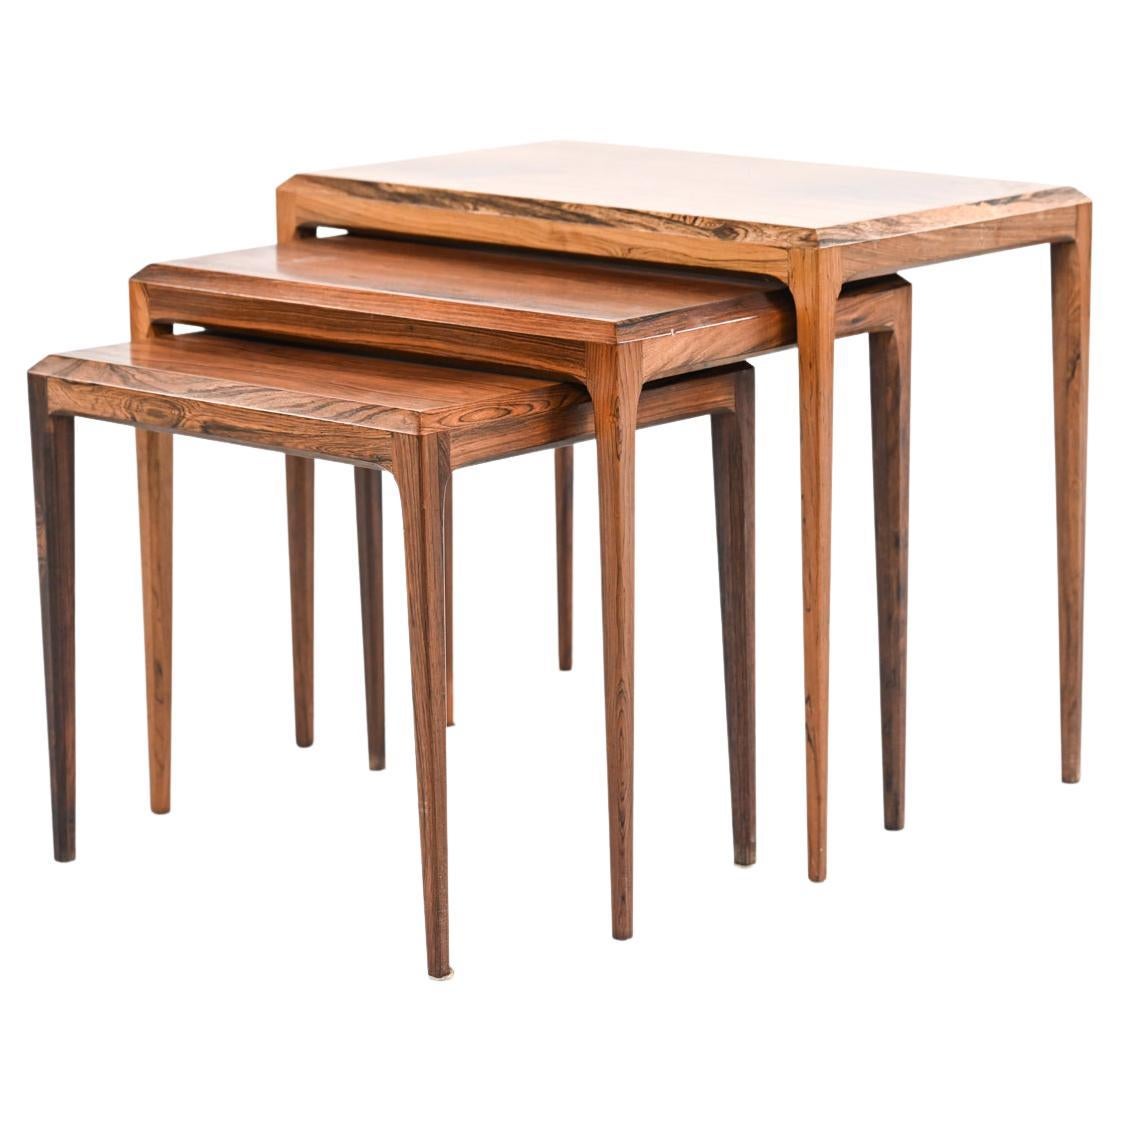 Set of 3 Rosewood Nesting Tables, Johannes Andersen for Silkeborg, c. 1960's For Sale